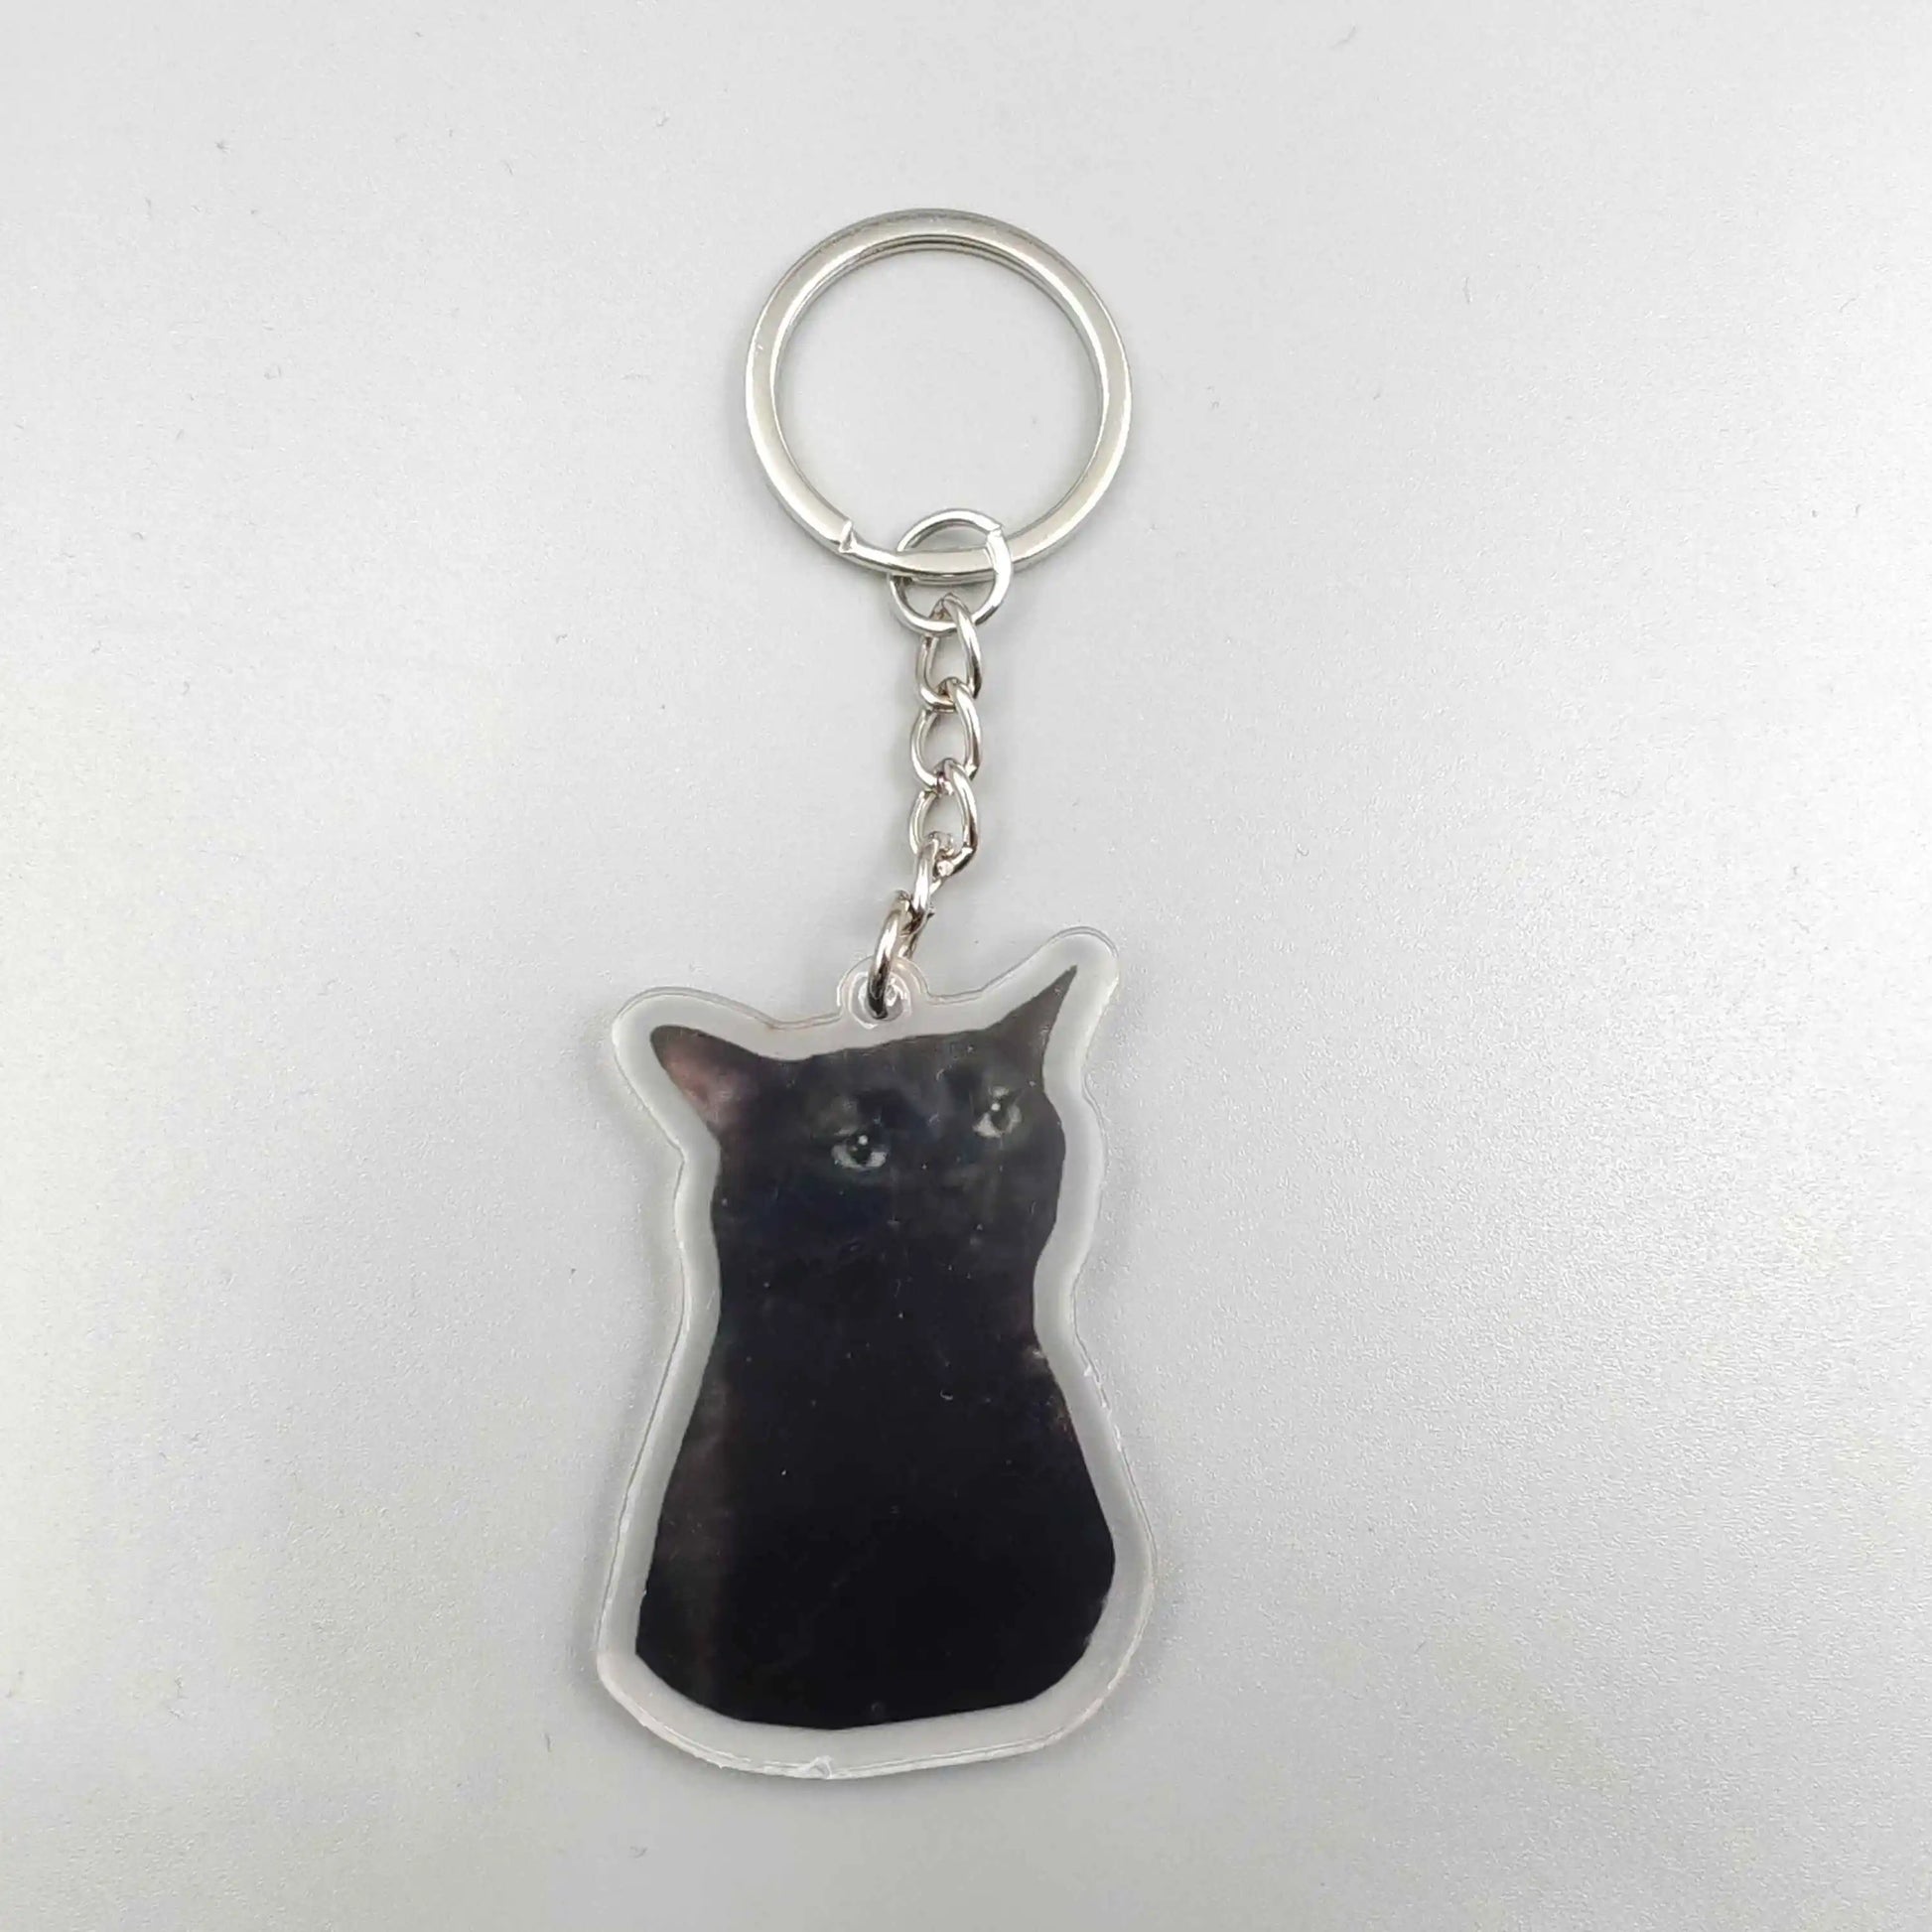 Cat Coughing Meme Viral Video Zoning Out Black Cat Meme Choking Meme Strawberry Cat Memes Key Chain Car Keyring Student Gift